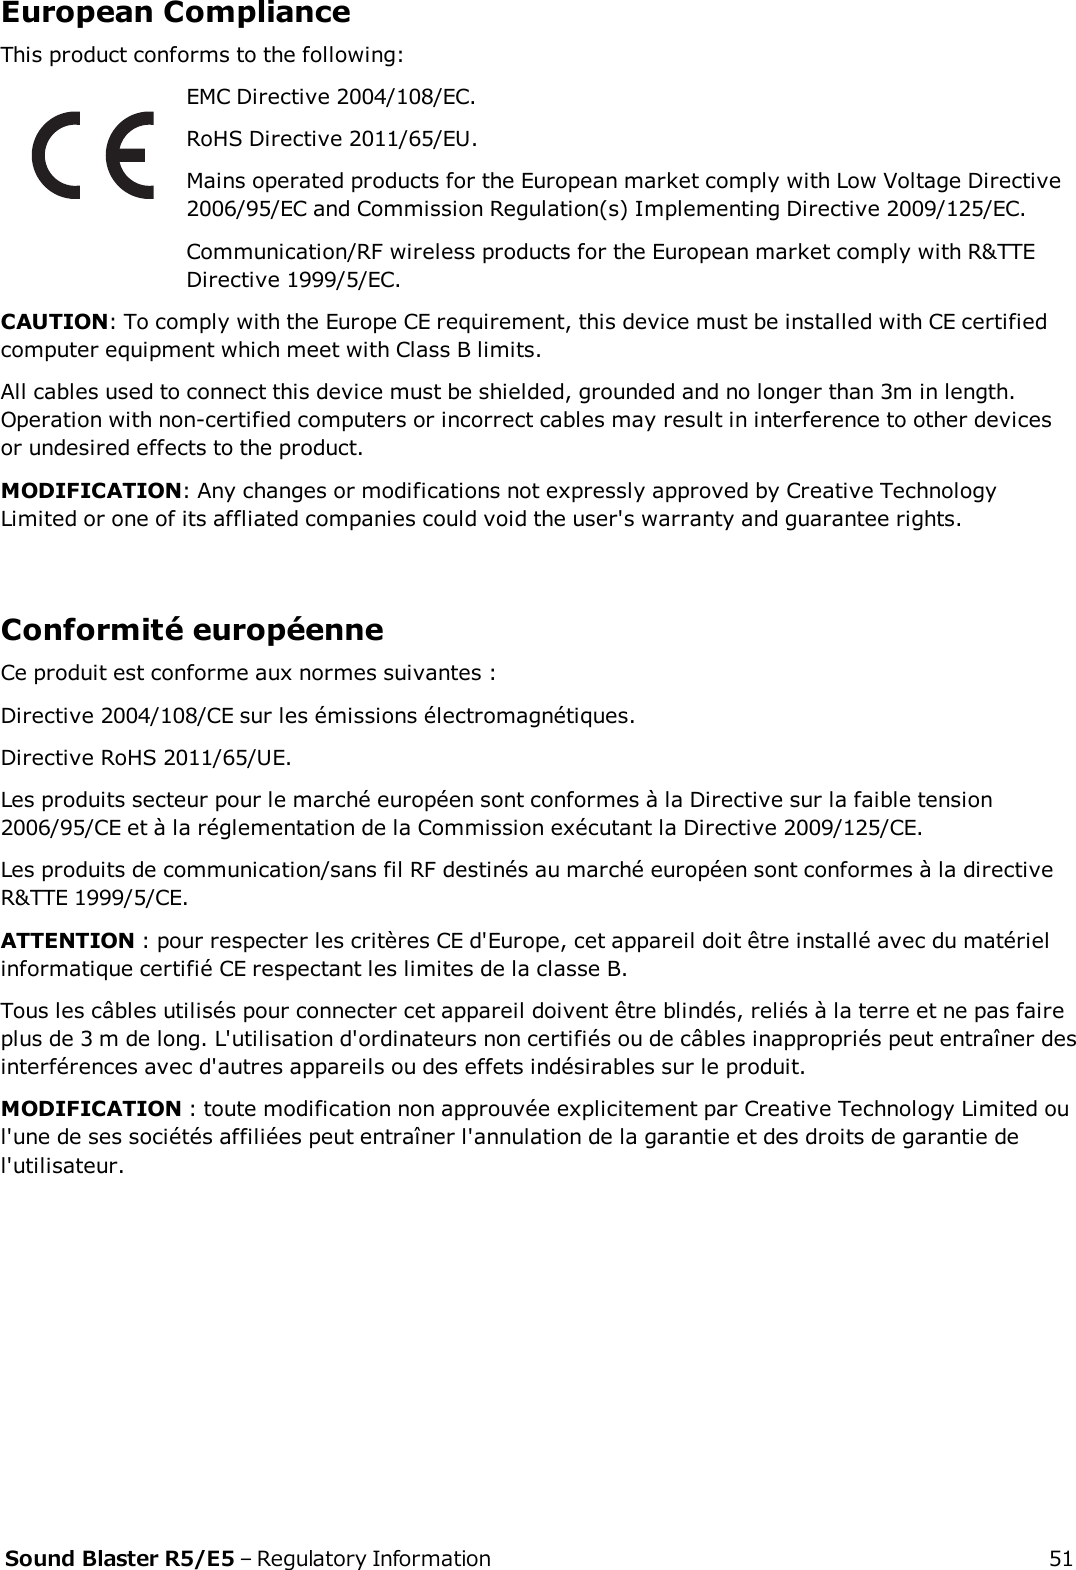 European ComplianceThis product conforms to the following:EMC Directive 2004/108/EC.RoHS Directive 2011/65/EU.Mains operated products for the European market comply with Low Voltage Directive2006/95/EC and Commission Regulation(s) Implementing Directive 2009/125/EC.Communication/RF wireless products for the European market comply with R&amp;TTEDirective 1999/5/EC.CAUTION: To comply with the Europe CErequirement, this device must be installed with CE certifiedcomputer equipment which meet with Class B limits.All cables used to connect this device must be shielded, grounded and no longer than 3m in length.Operation with non-certified computers or incorrect cables may result in interference to other devicesor undesired effects to the product.MODIFICATION: Any changes or modifications not expressly approved by Creative TechnologyLimited or one of its affliated companies could void the user&apos;s warranty and guarantee rights.Conformité européenneCe produit est conforme aux normes suivantes :Directive 2004/108/CE sur les émissions électromagnétiques.Directive RoHS 2011/65/UE.Les produits secteur pour le marché européen sont conformes à la Directive sur la faible tension2006/95/CE et à la réglementation de la Commission exécutant la Directive 2009/125/CE.Les produits de communication/sans fil RF destinés au marché européen sont conformes à la directiveR&amp;TTE 1999/5/CE.ATTENTION : pour respecter les critères CE d&apos;Europe, cet appareil doit être installé avec du matérielinformatique certifié CE respectant les limites de la classe B.Tous les câbles utilisés pour connecter cet appareil doivent être blindés, reliés à la terre et ne pas faireplus de 3 m de long. L&apos;utilisation d&apos;ordinateurs non certifiés ou de câbles inappropriés peut entraîner desinterférences avec d&apos;autres appareils ou des effets indésirables sur le produit.MODIFICATION : toute modification non approuvée explicitement par Creative Technology Limited oul&apos;une de ses sociétés affiliées peut entraîner l&apos;annulation de la garantie et des droits de garantie del&apos;utilisateur.Sound Blaster R5/E5 – Regulatory Information 51